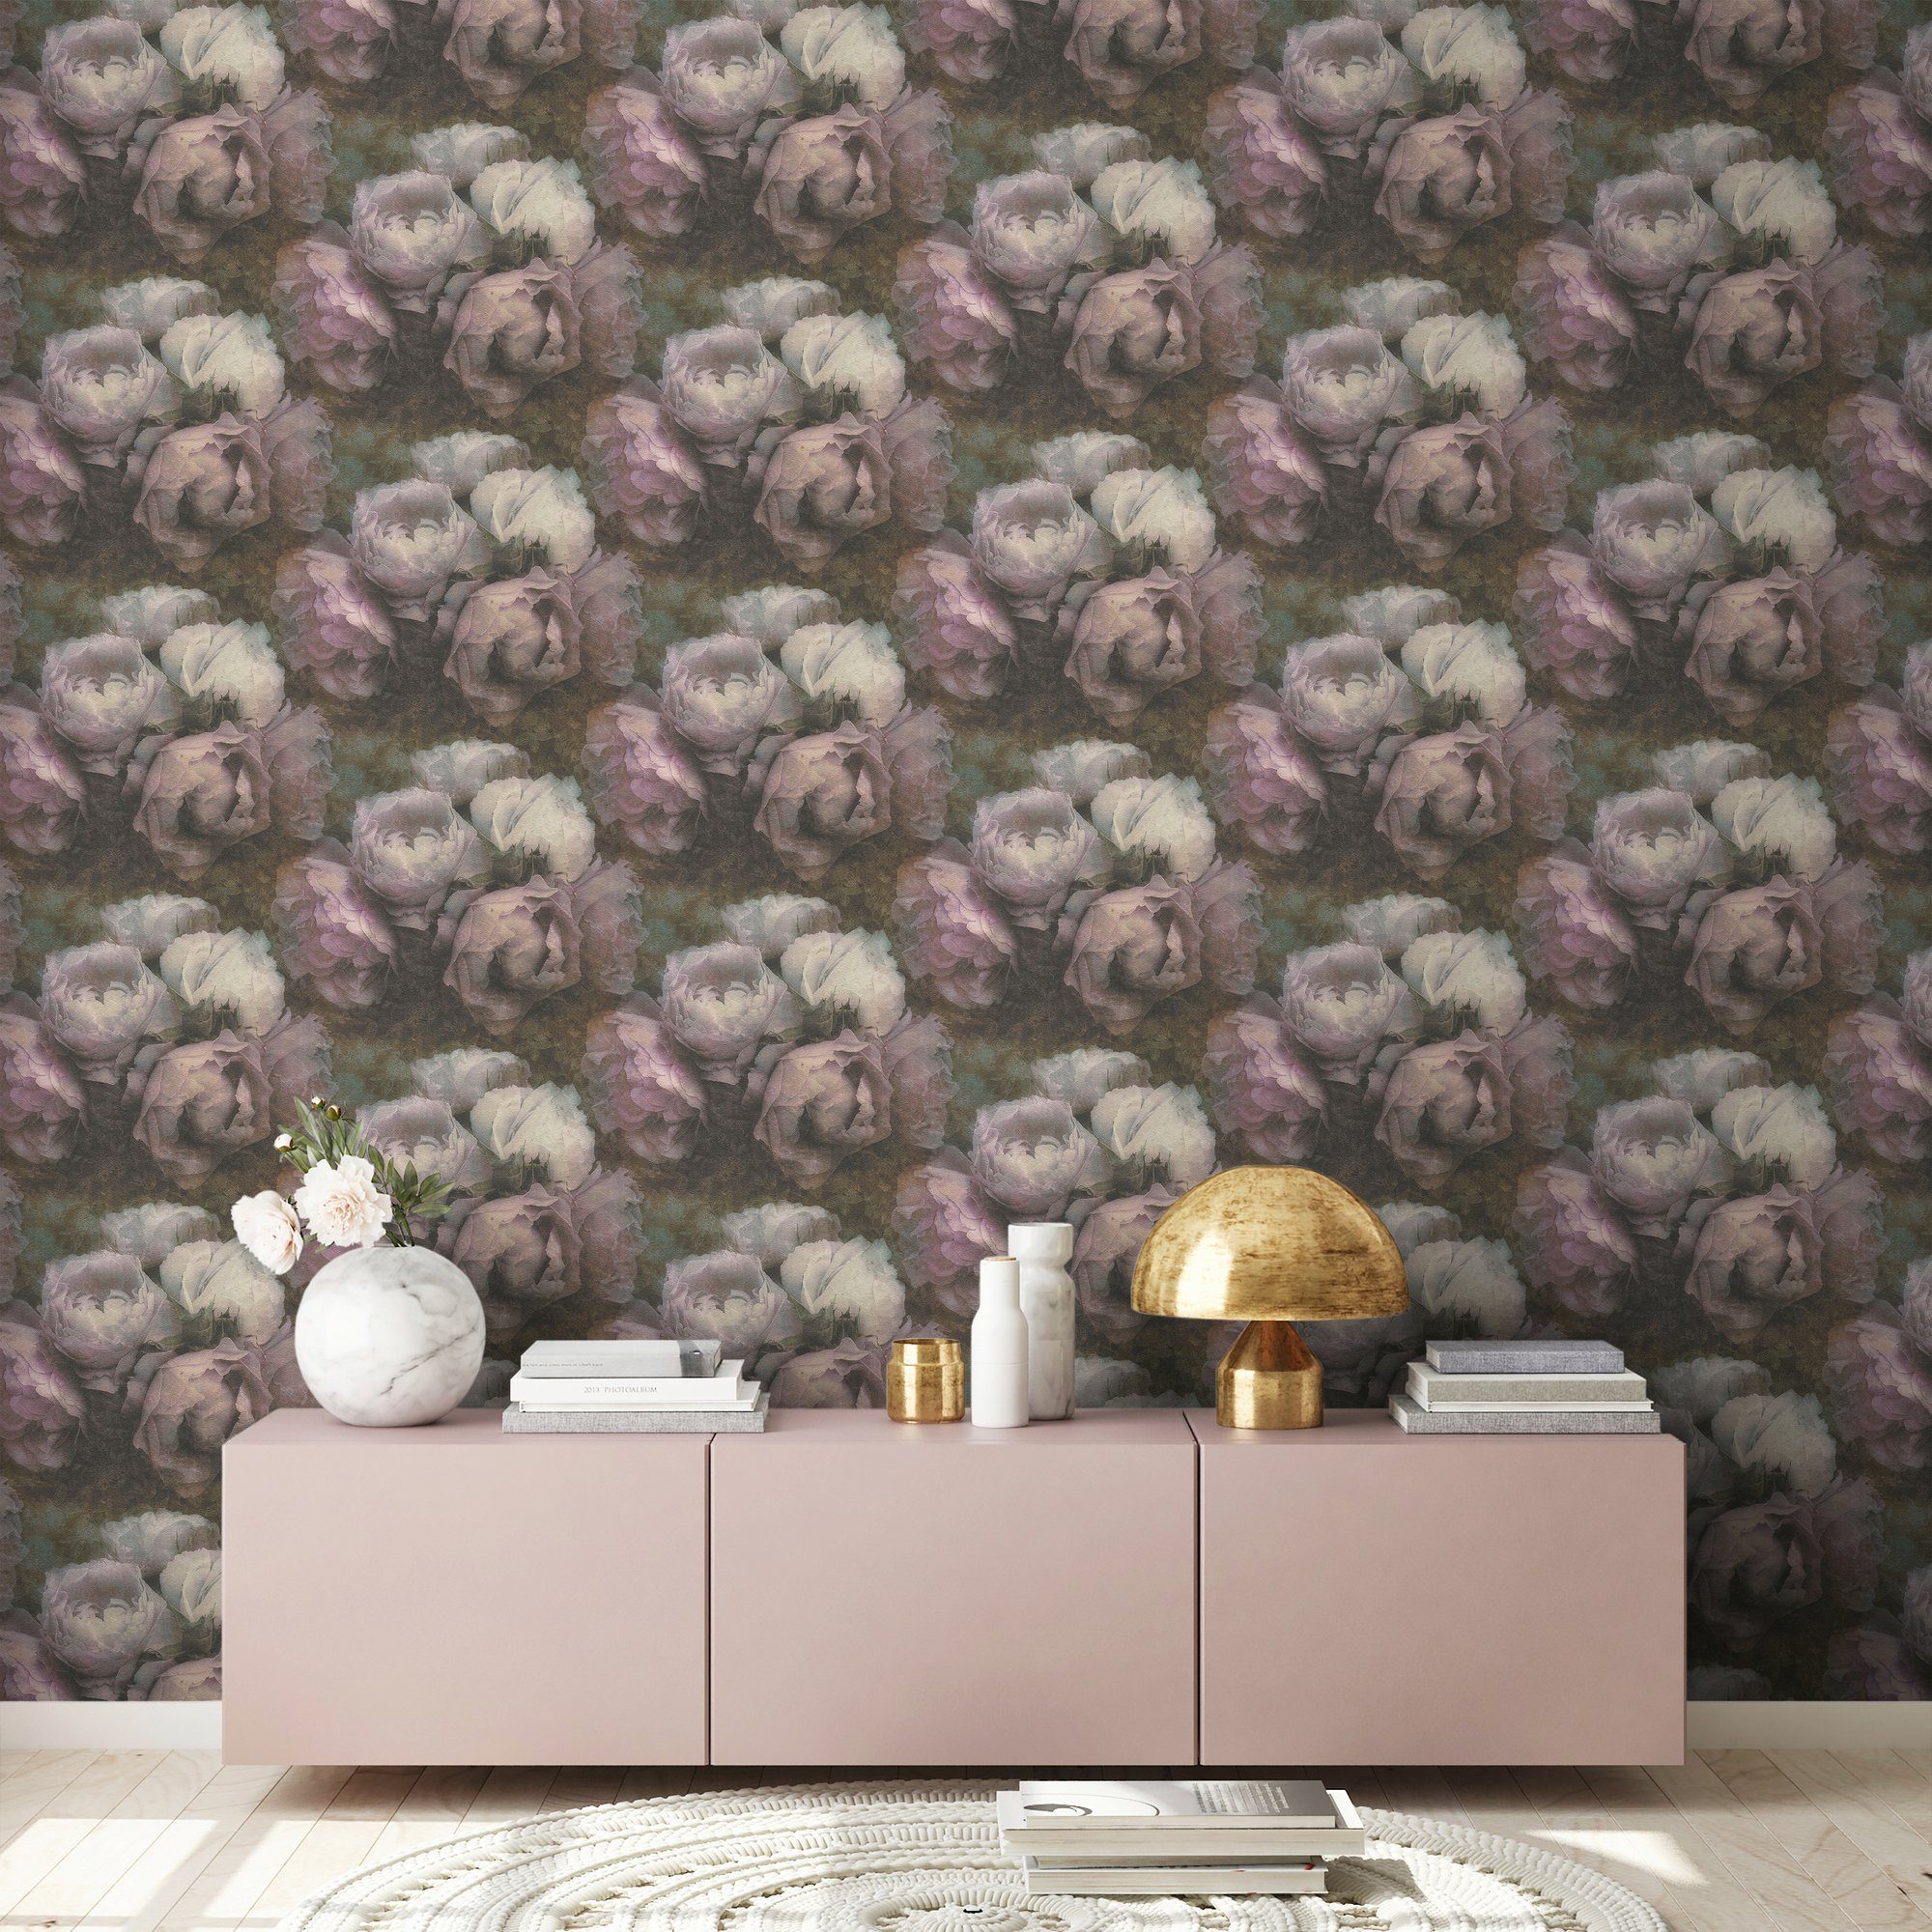 Vliestapete romantischen floral, Romantic mit lila/grau Walls Création Rosen, A.S. Tapete living Dream Blumen walls New